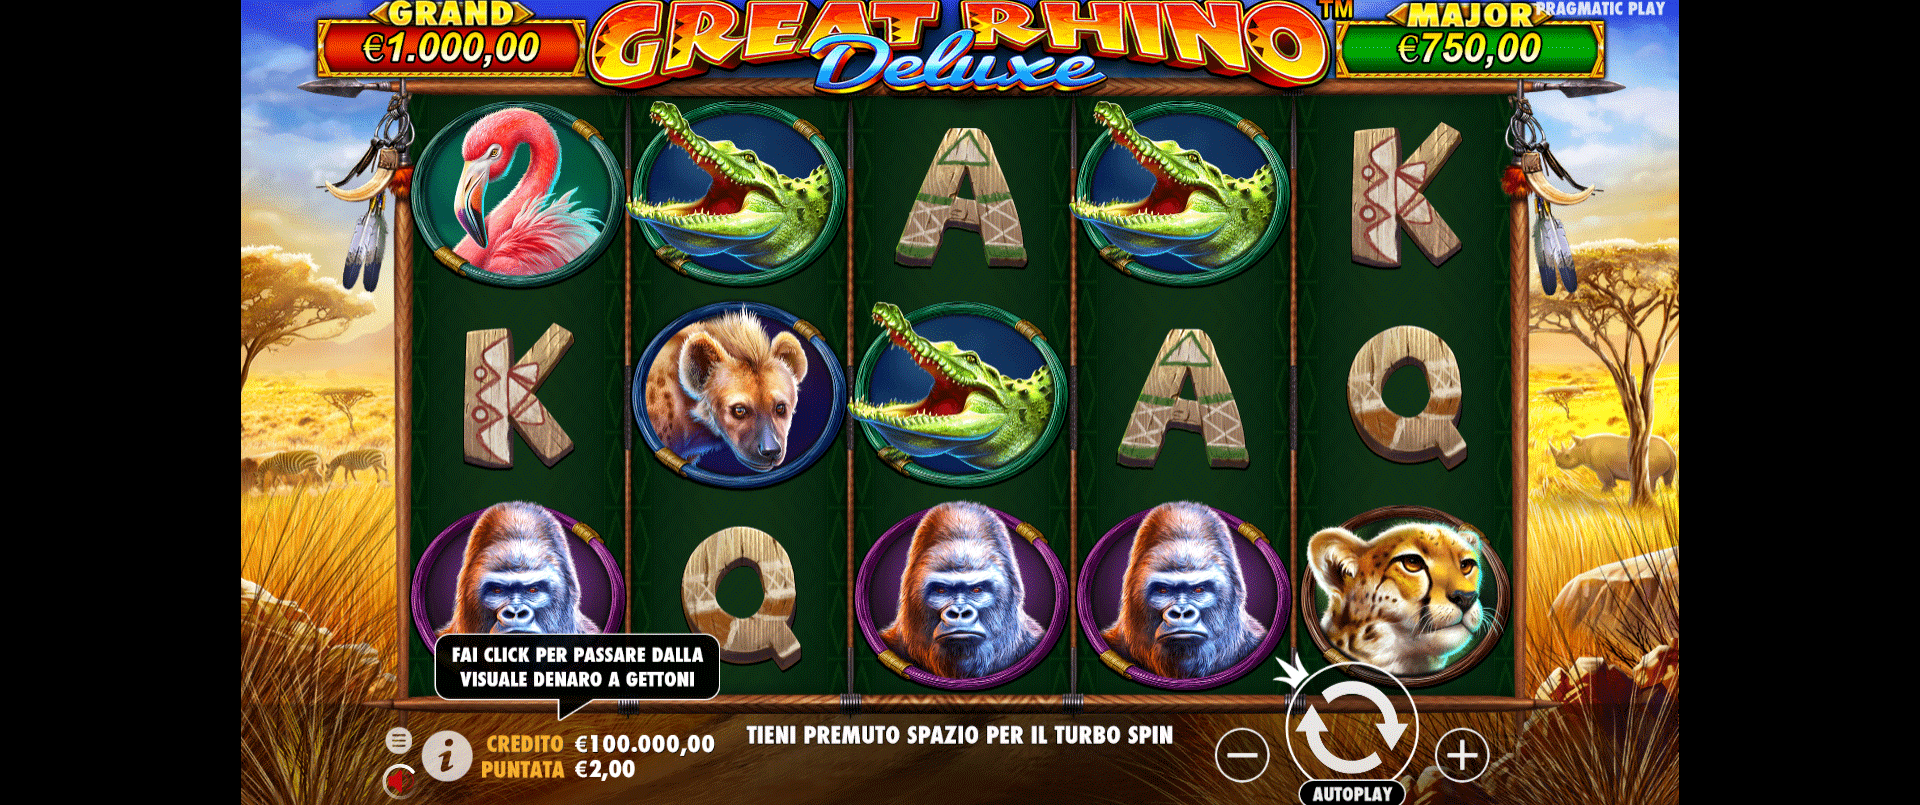 Slot Great Rhino Deluxe